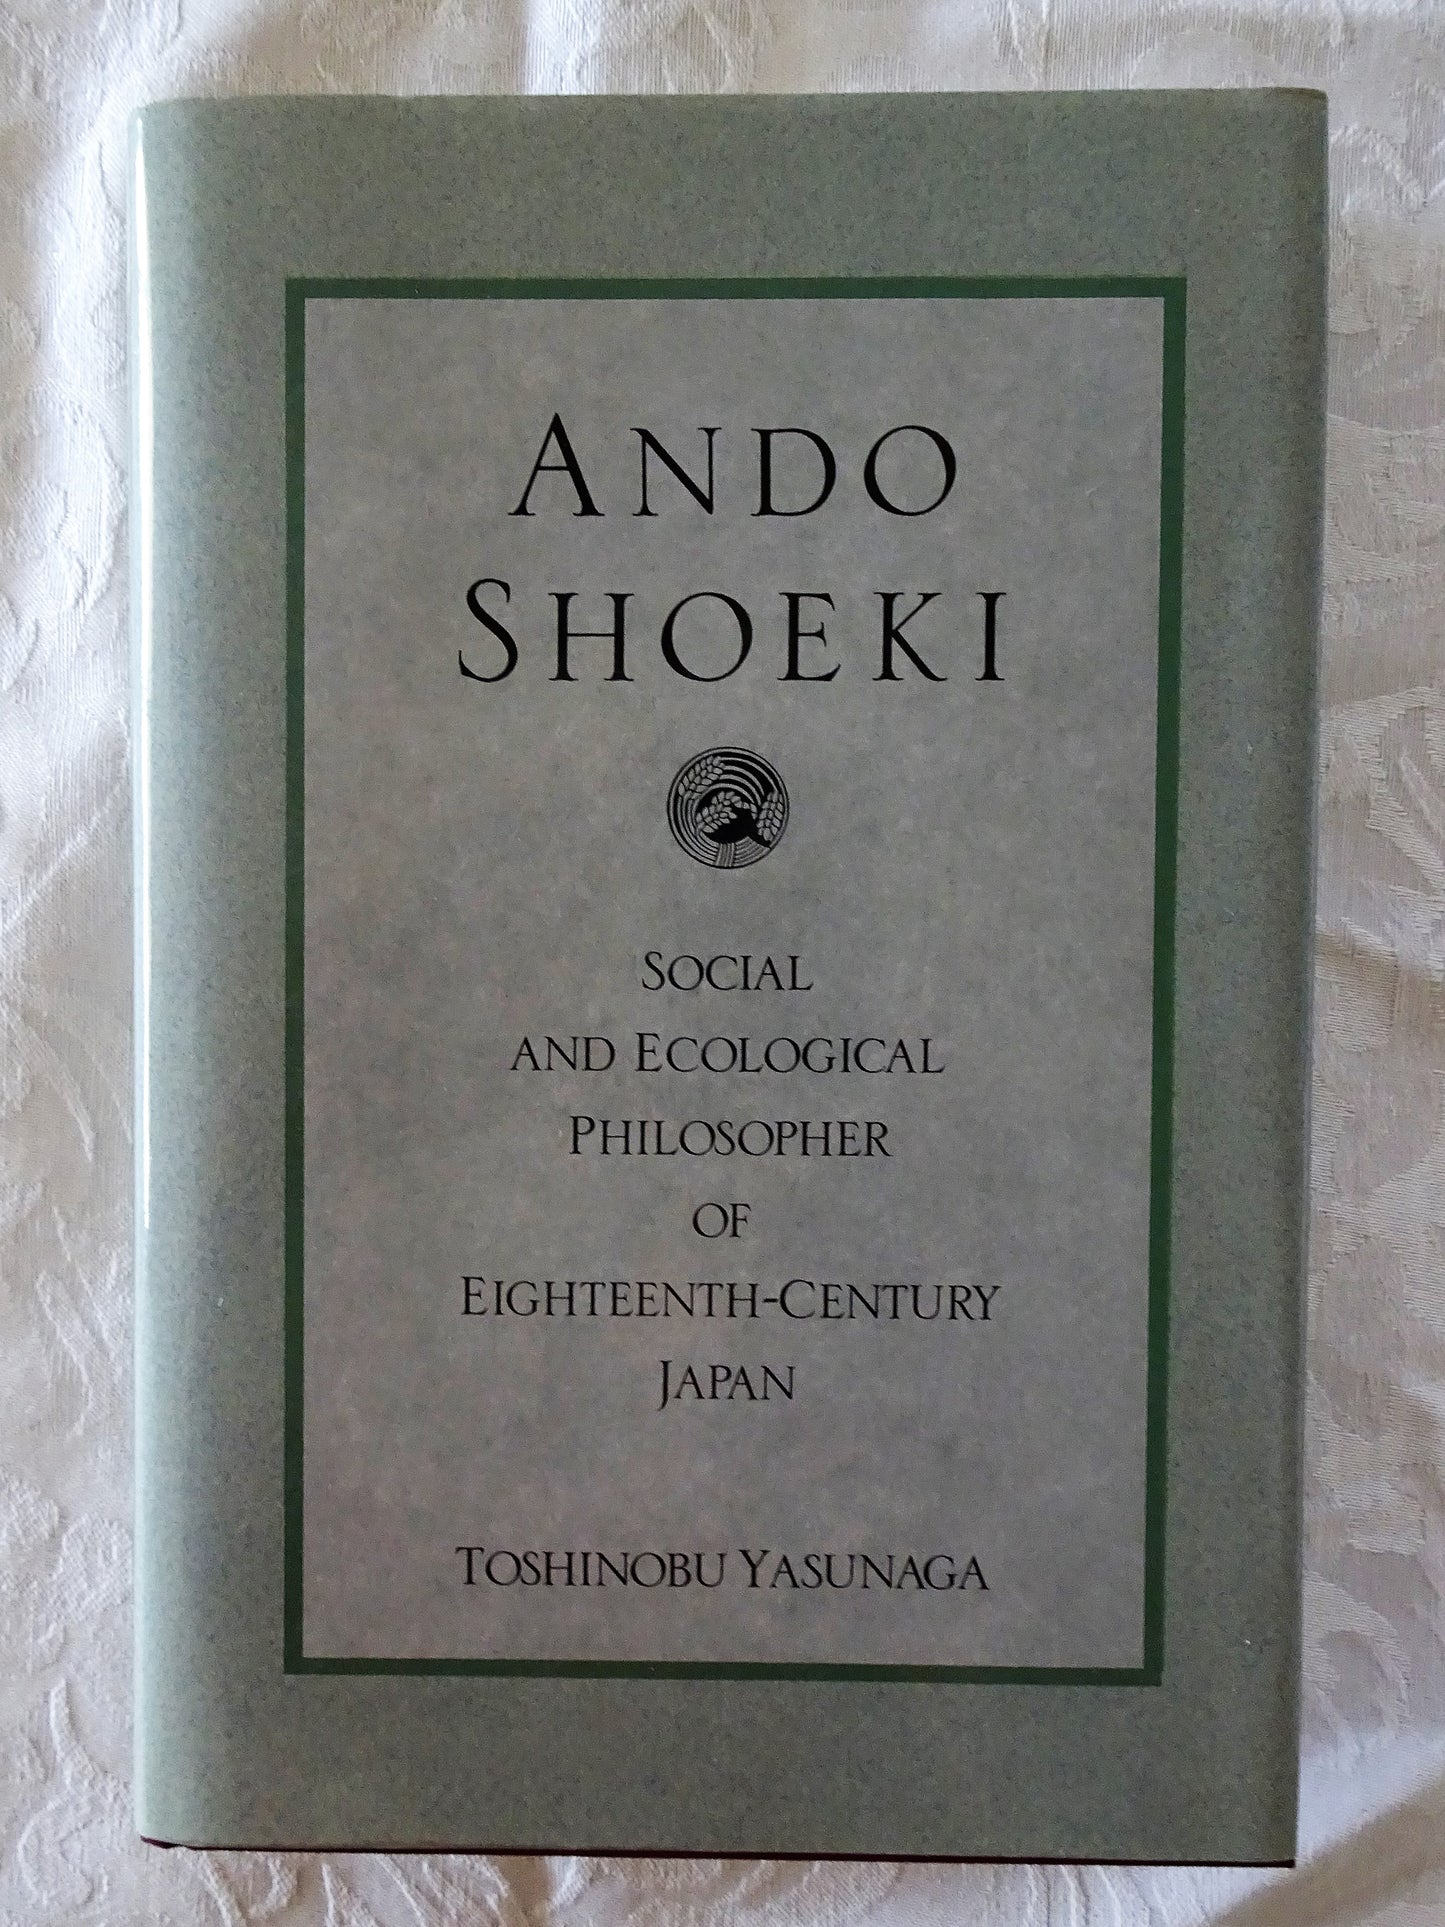 Ando Shoeki  Social and Ecological Philosopher of Eighteenth-Century Japan  by Toshinobu Yasunaga